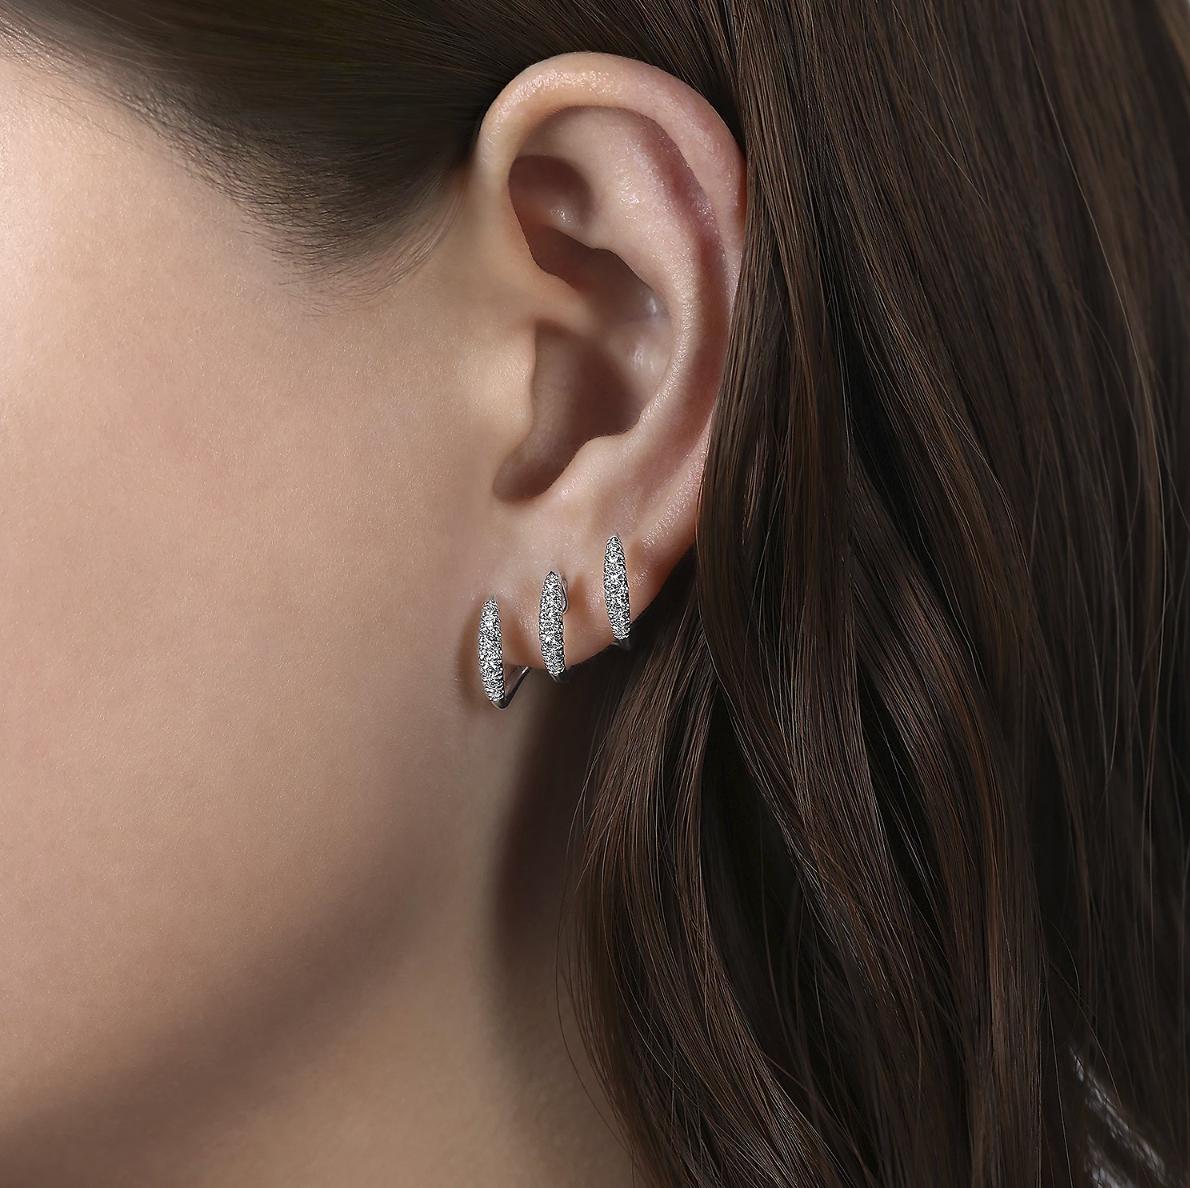 .50 carat diamond earrings